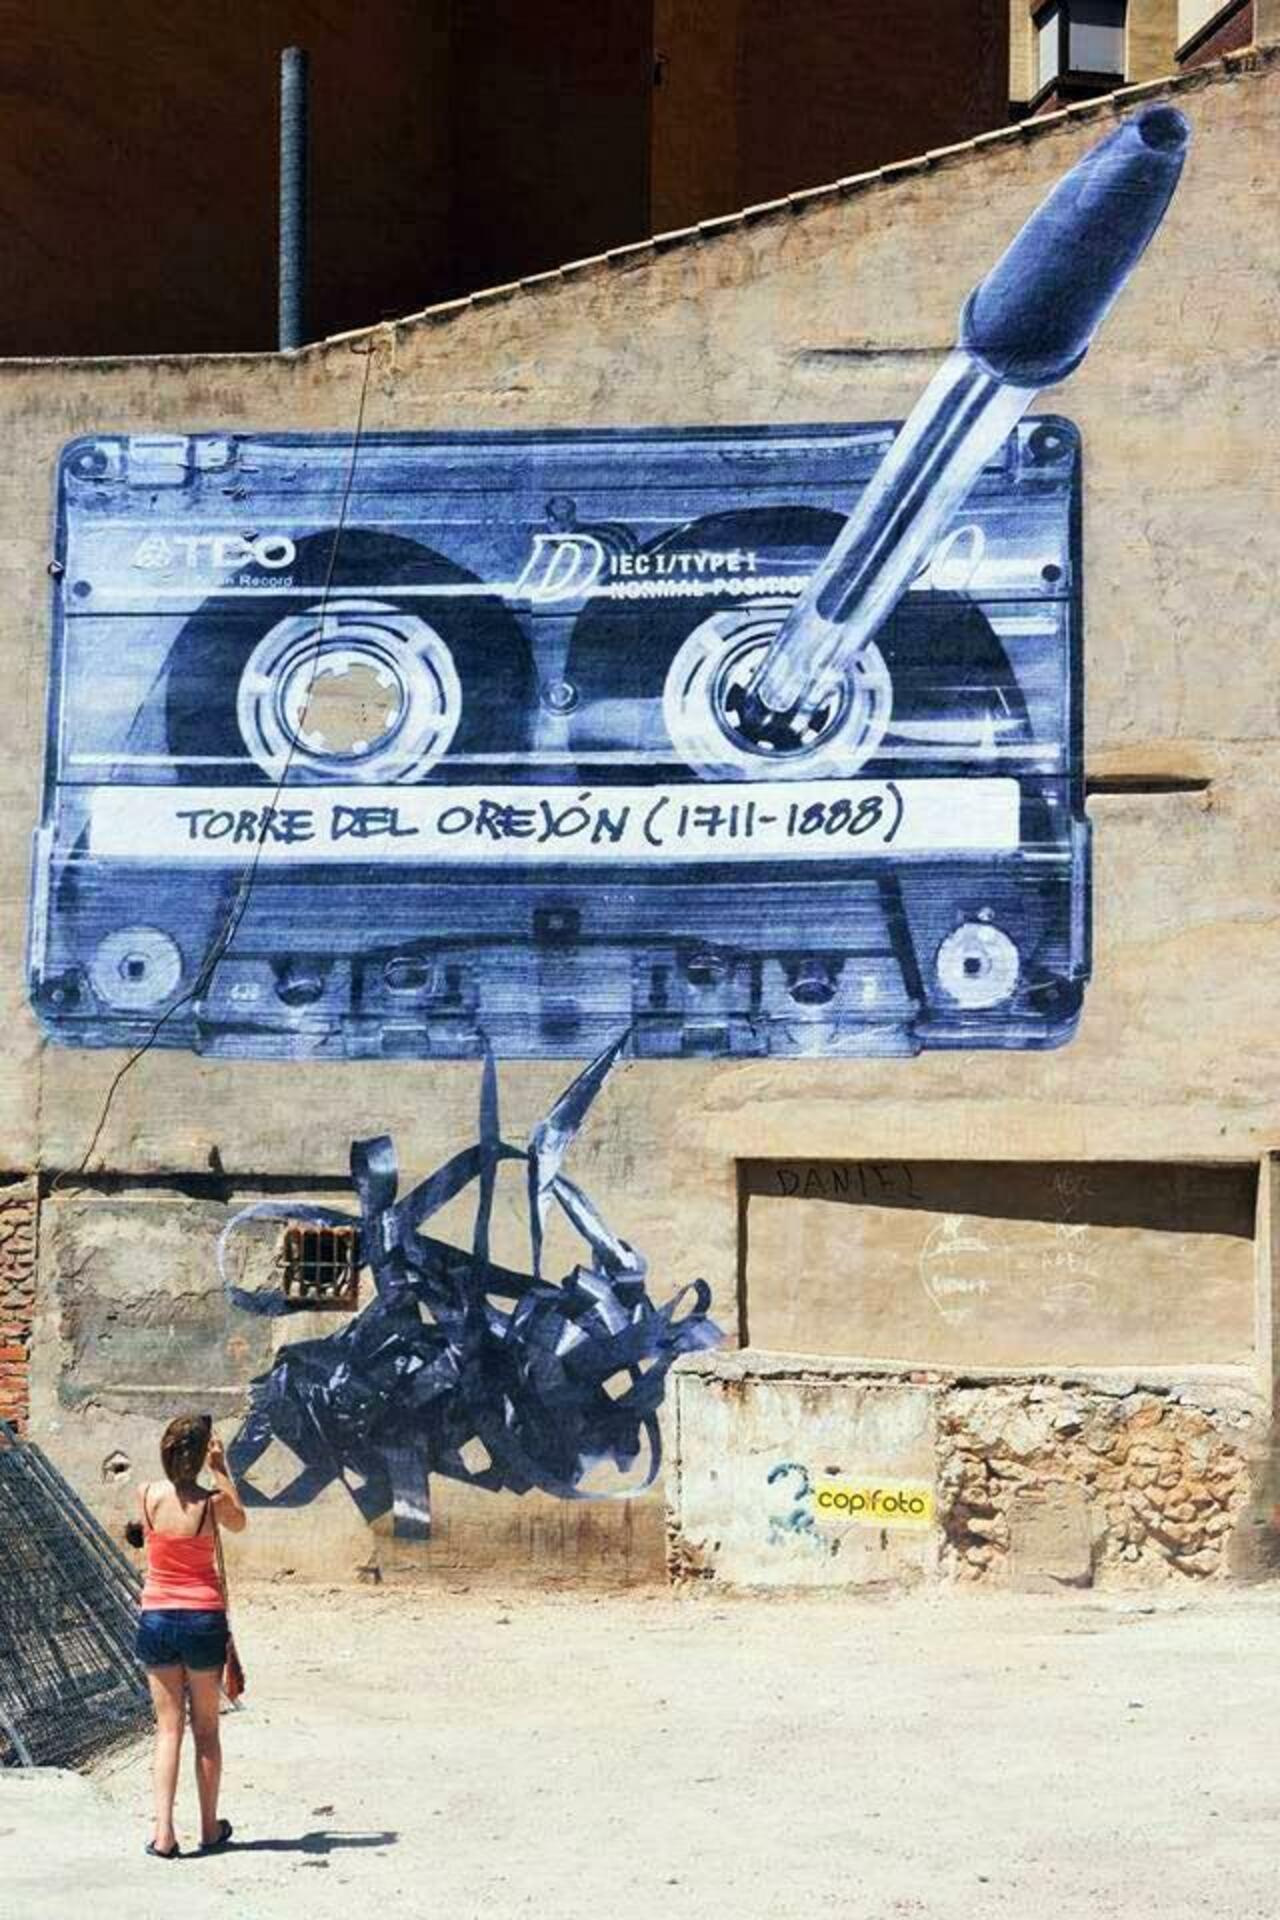 Kann mich noch gut daran erinnern 

StreetArtNews on G+
EspaiMGR Spain 
#streetart #art #graffiti http://t.co/24uq1uKOG2